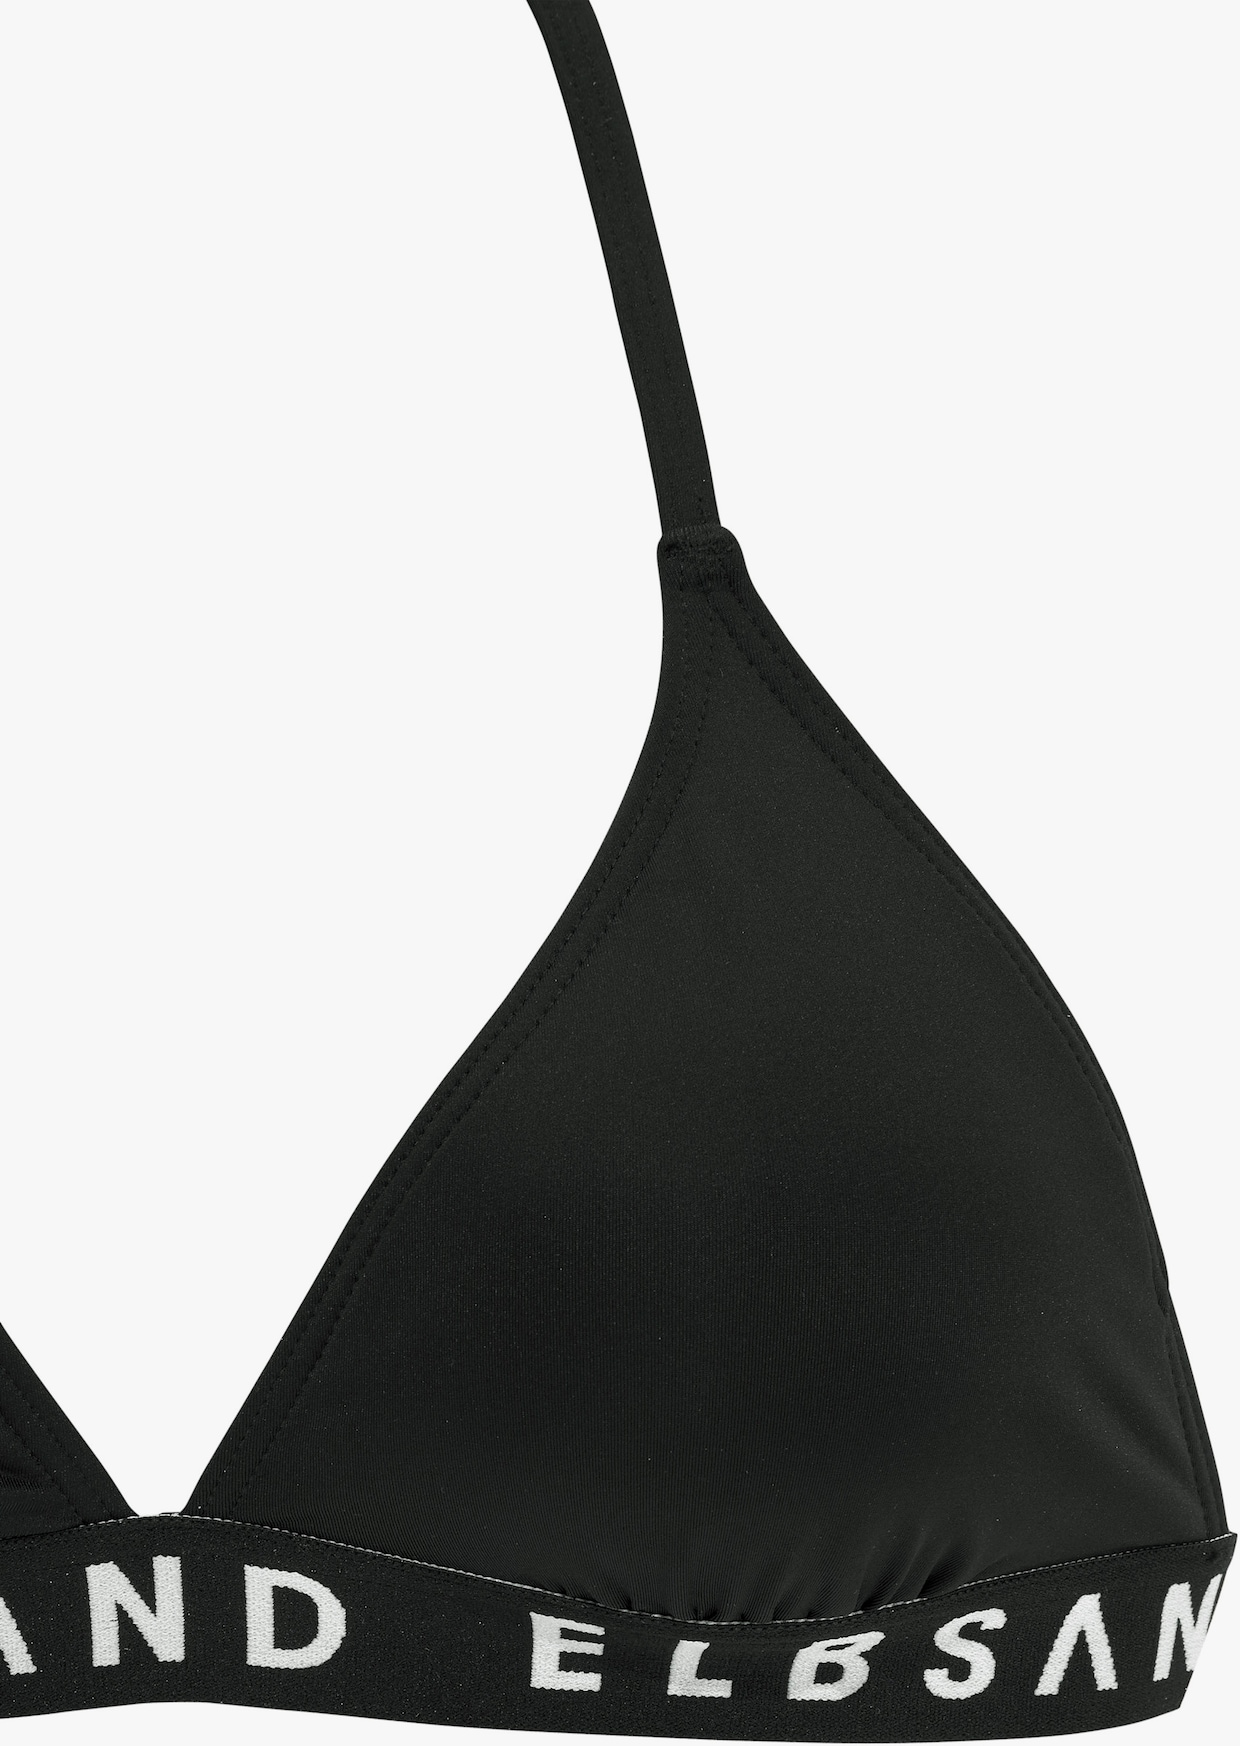 Elbsand Bikini triangle - noir